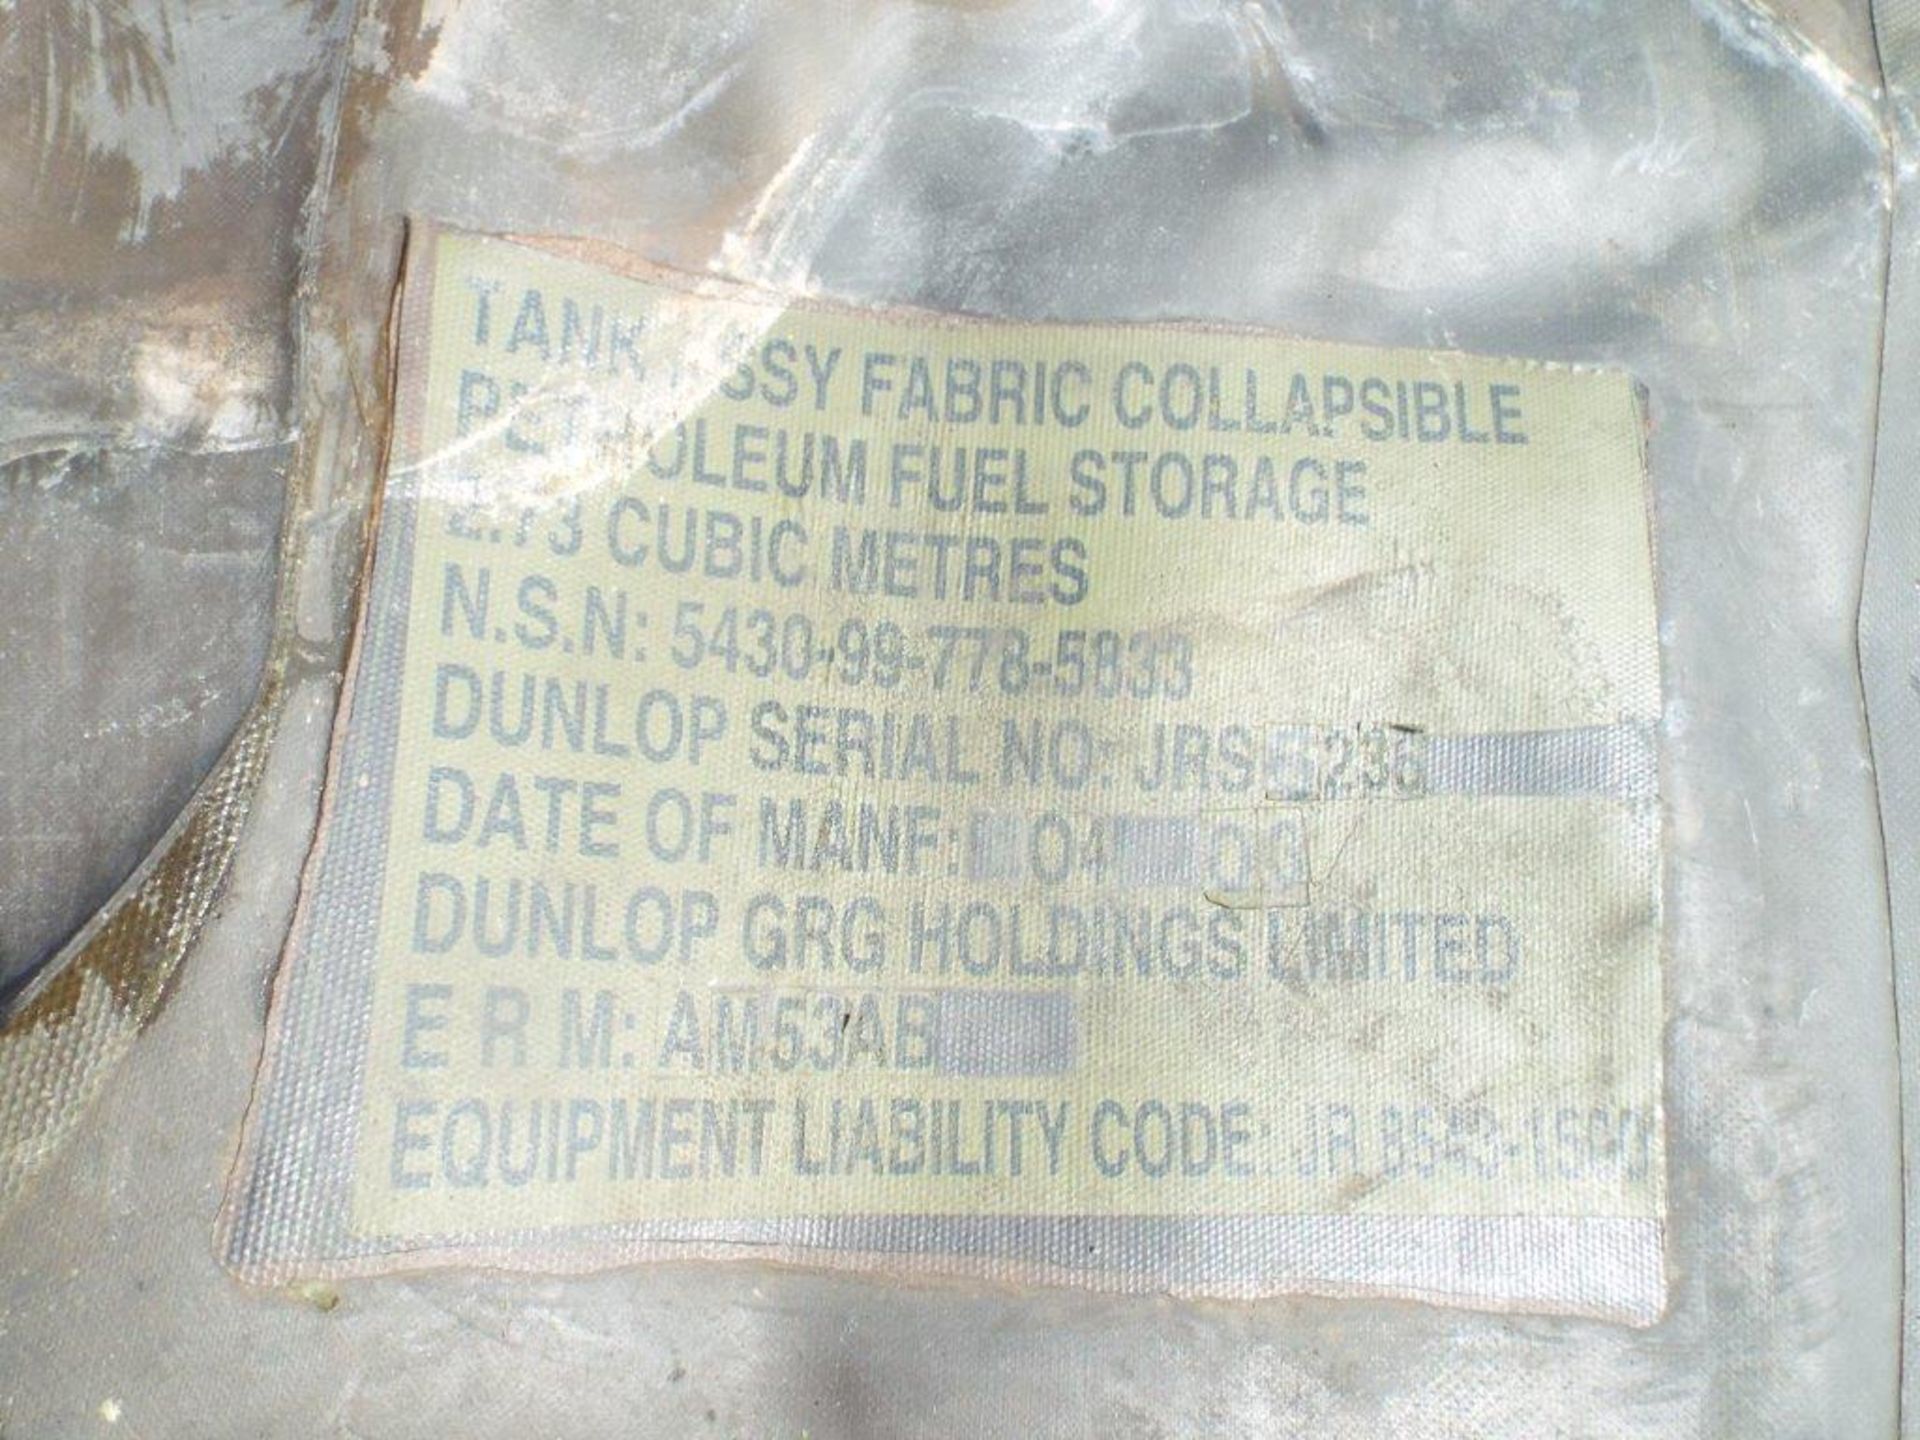 Dunlop 600 Gal Collapsible Fuel/Fluid Storage Bladder - Image 6 of 9